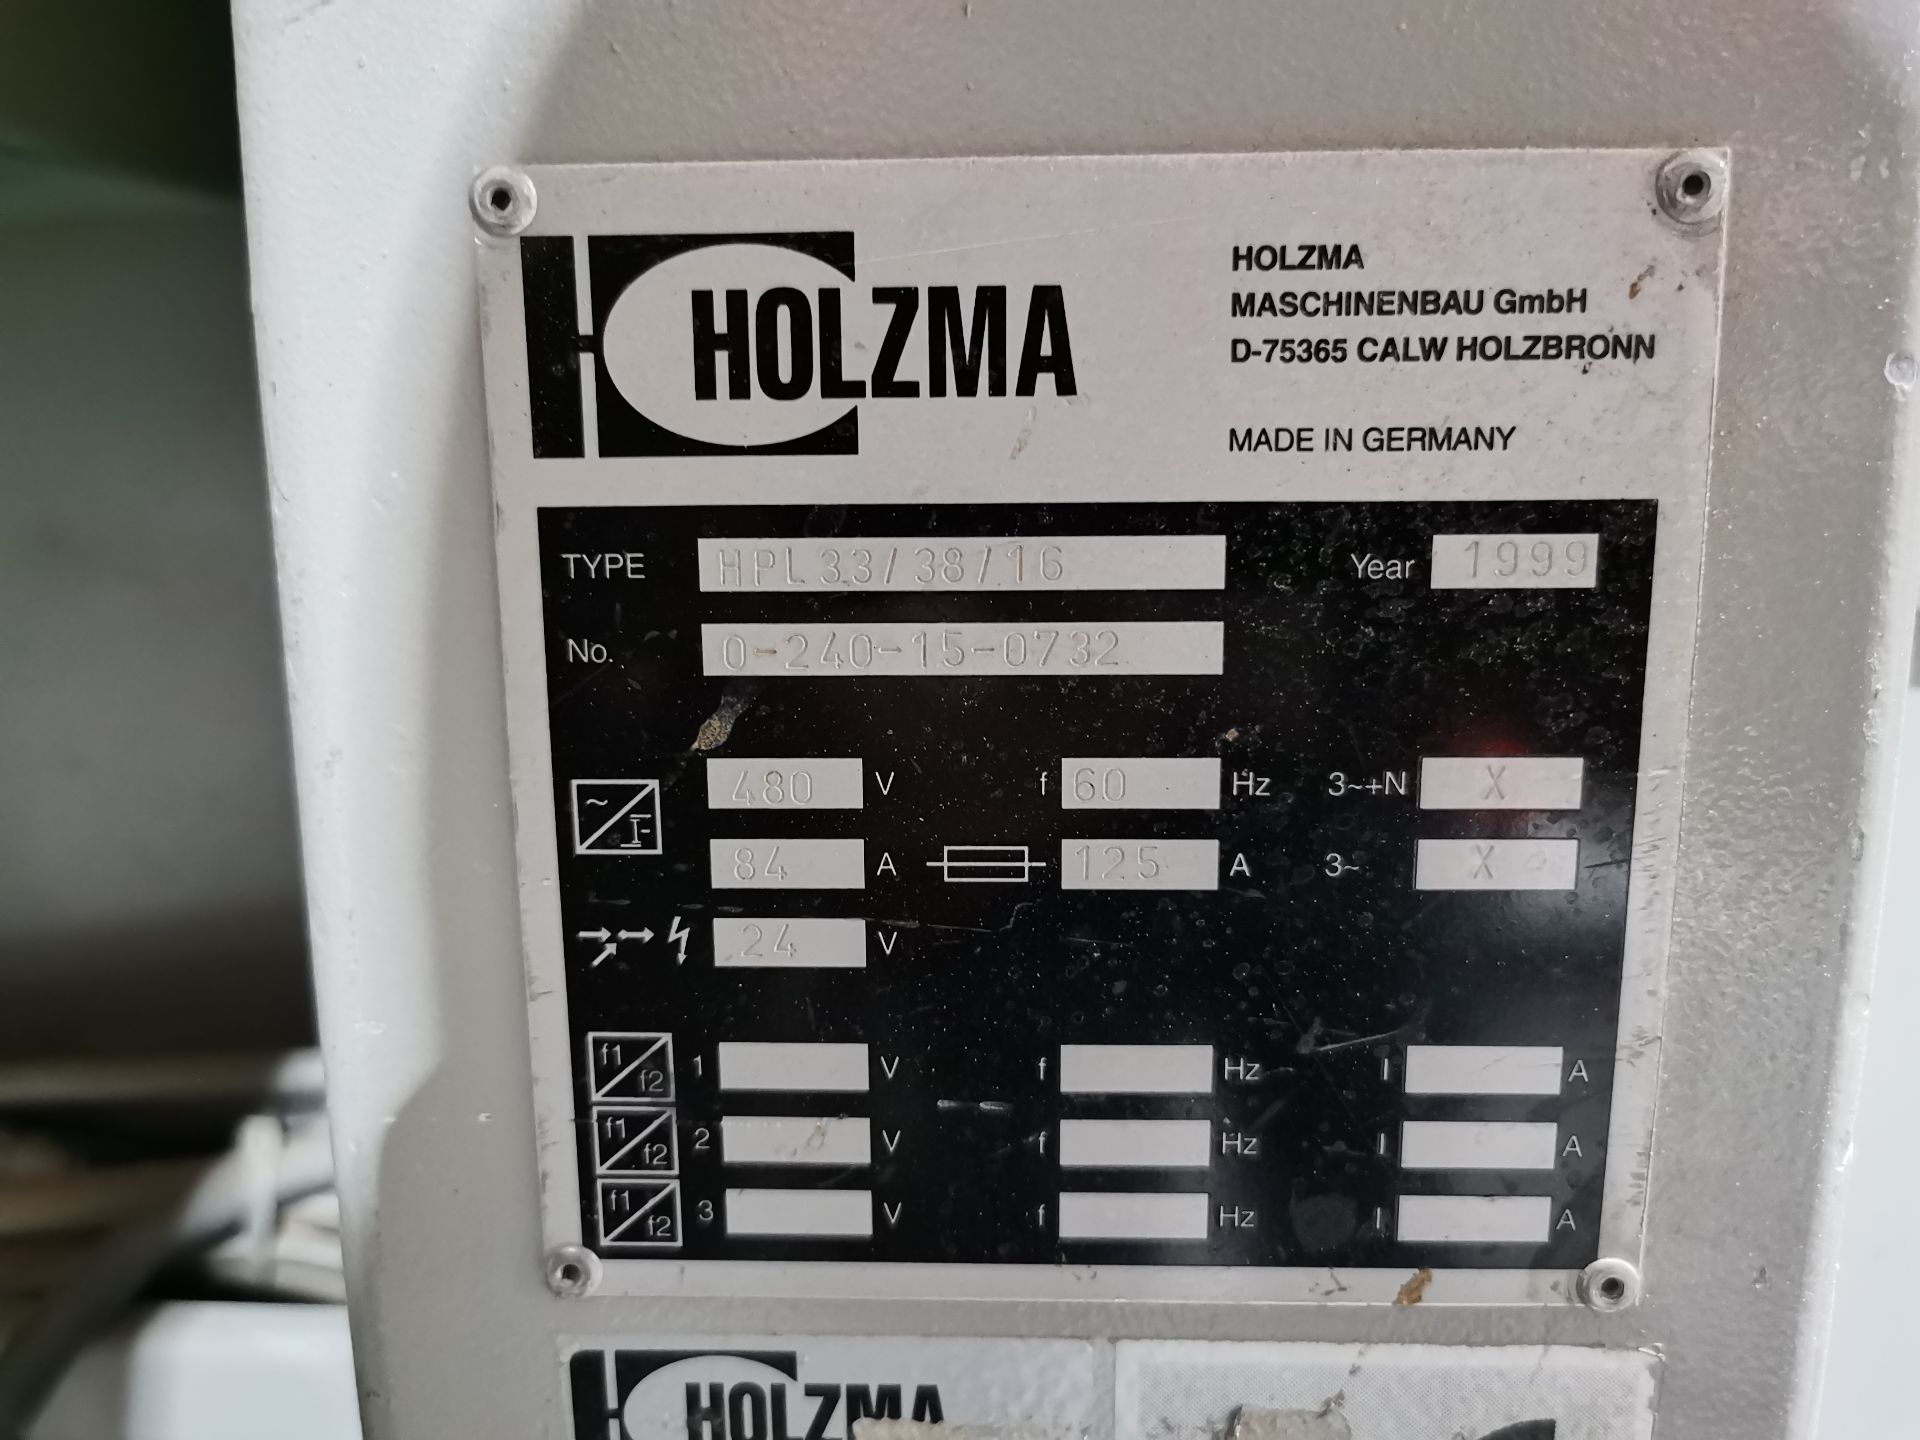 Holzma Saw Machine, Model HPL33/38/16, S/N 0-240-15-0732, Year 1999, 480 V / 60 Hz, 125 AMPS - Image 37 of 39